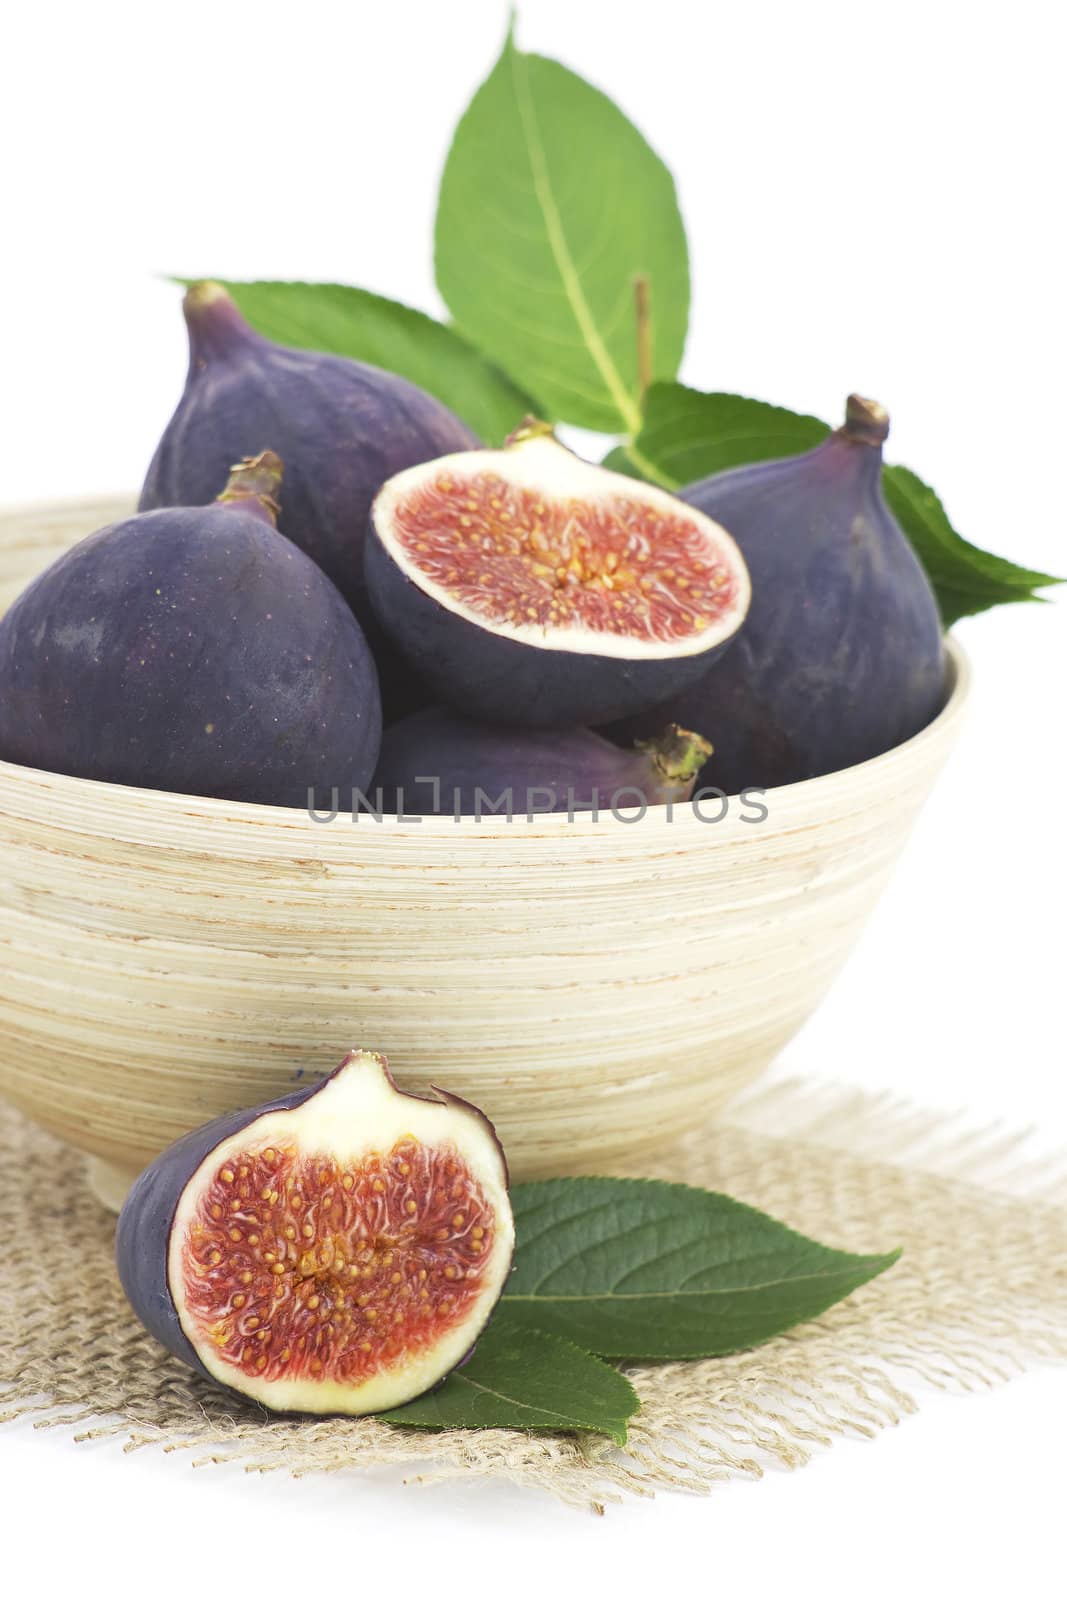 fresh figs by miradrozdowski